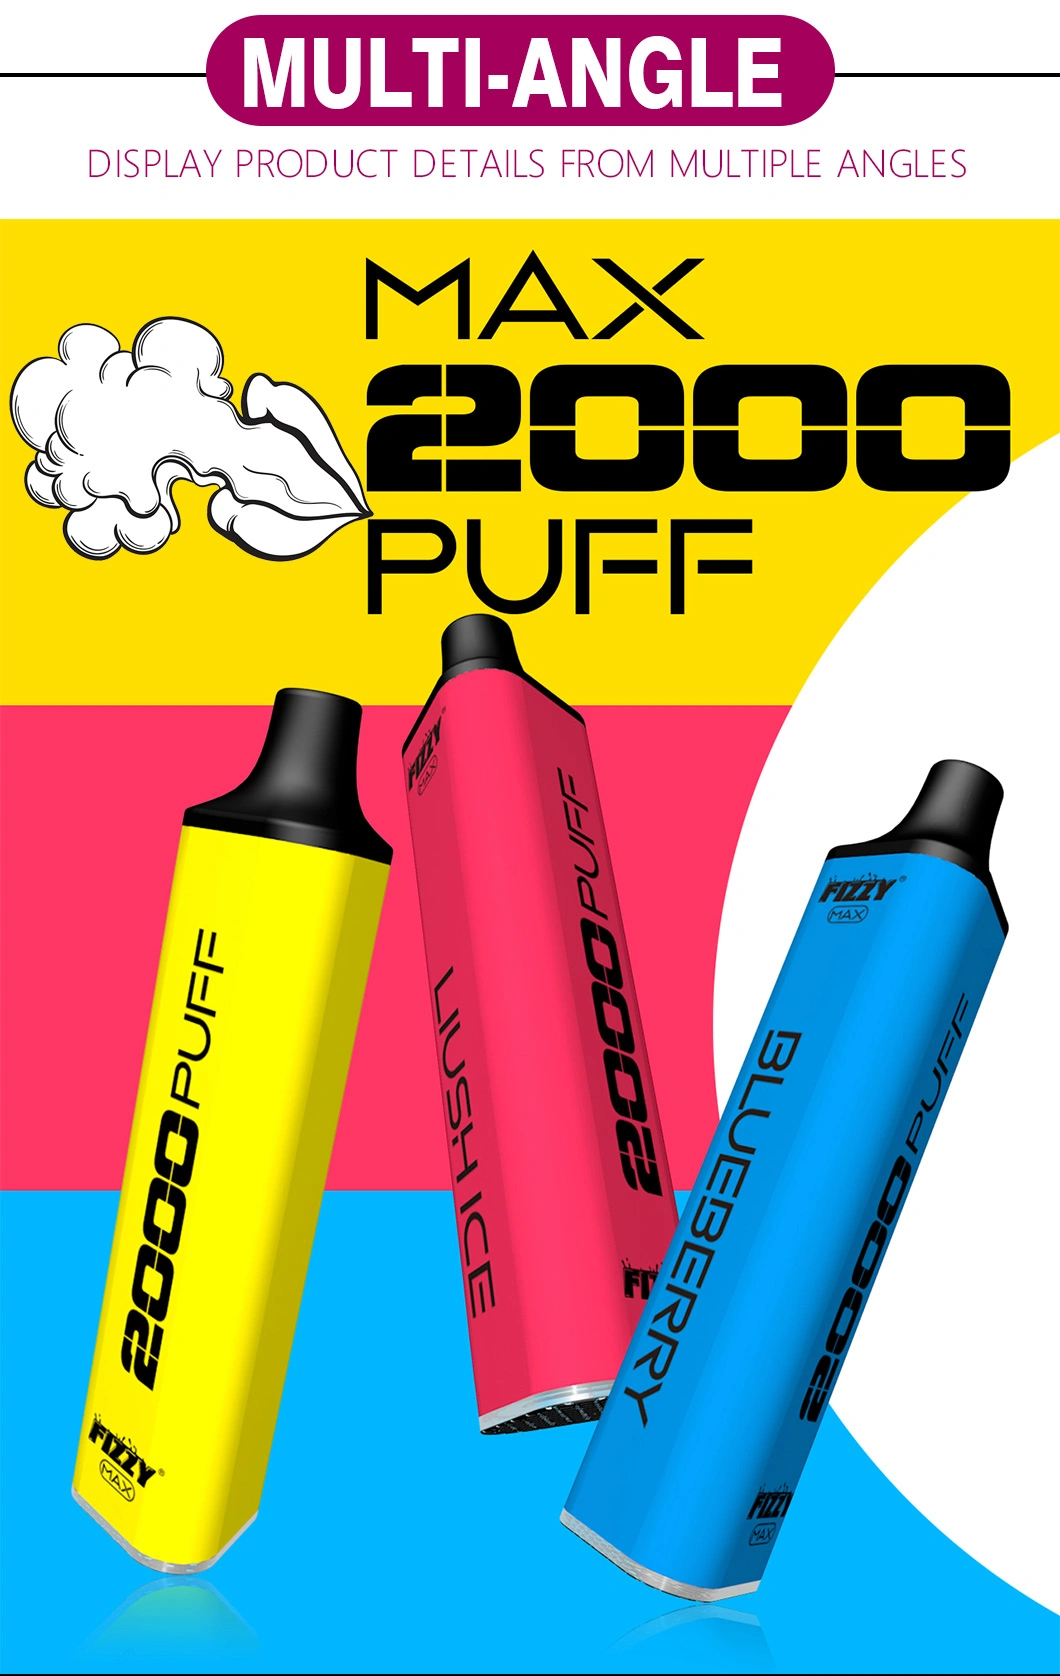 2020 Pop Big Smoke 2000puff Disposable Electronic Cigarette Puff Plus Vape Pen